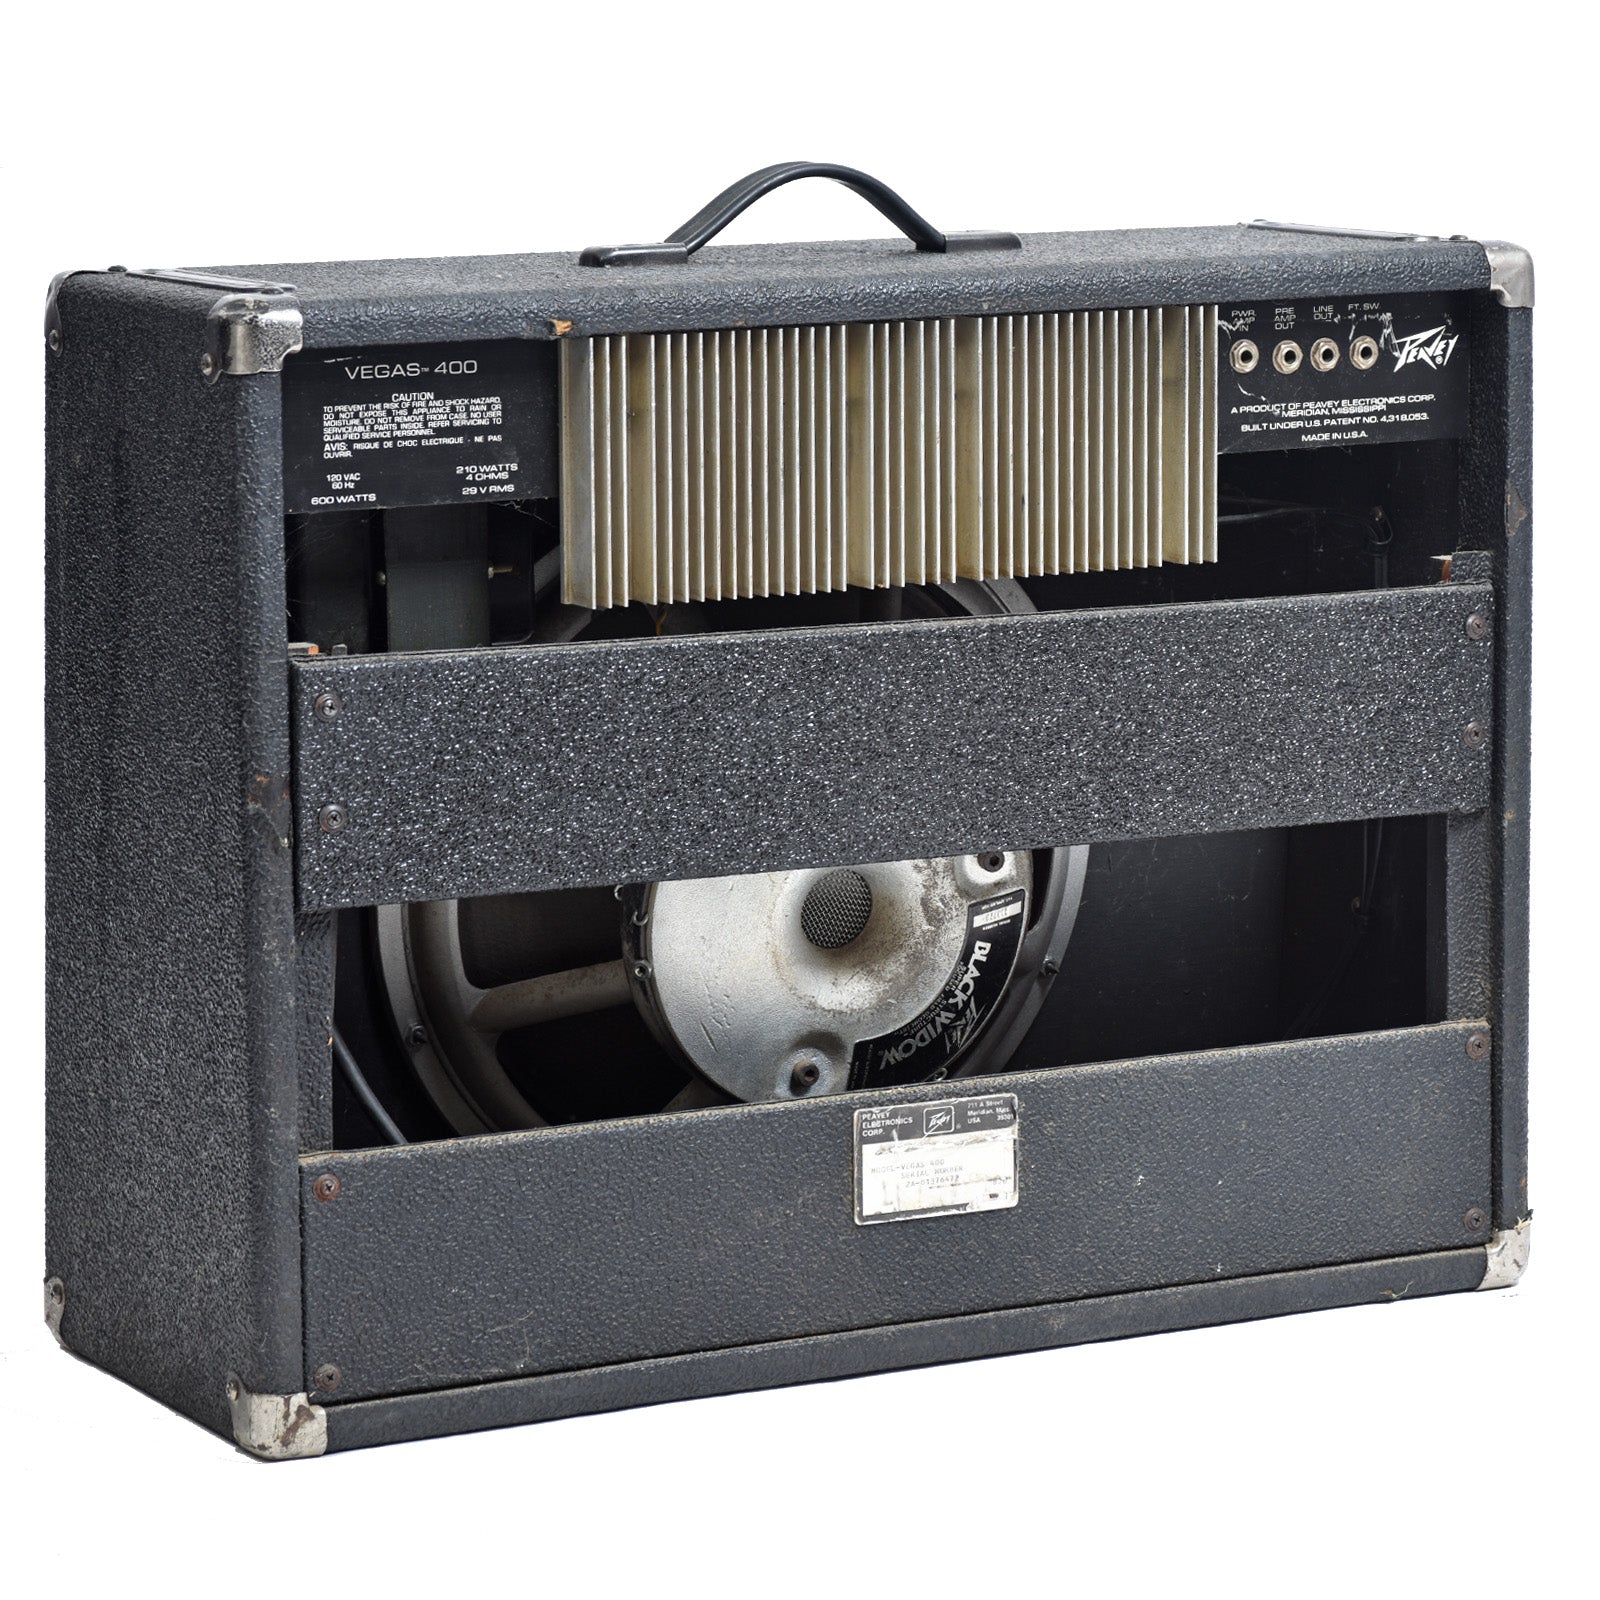 Image 3 of Peavey Vegas 400 - SKU# 130U-208802 : Product Type Amps & Amp Accessories : Elderly Instruments